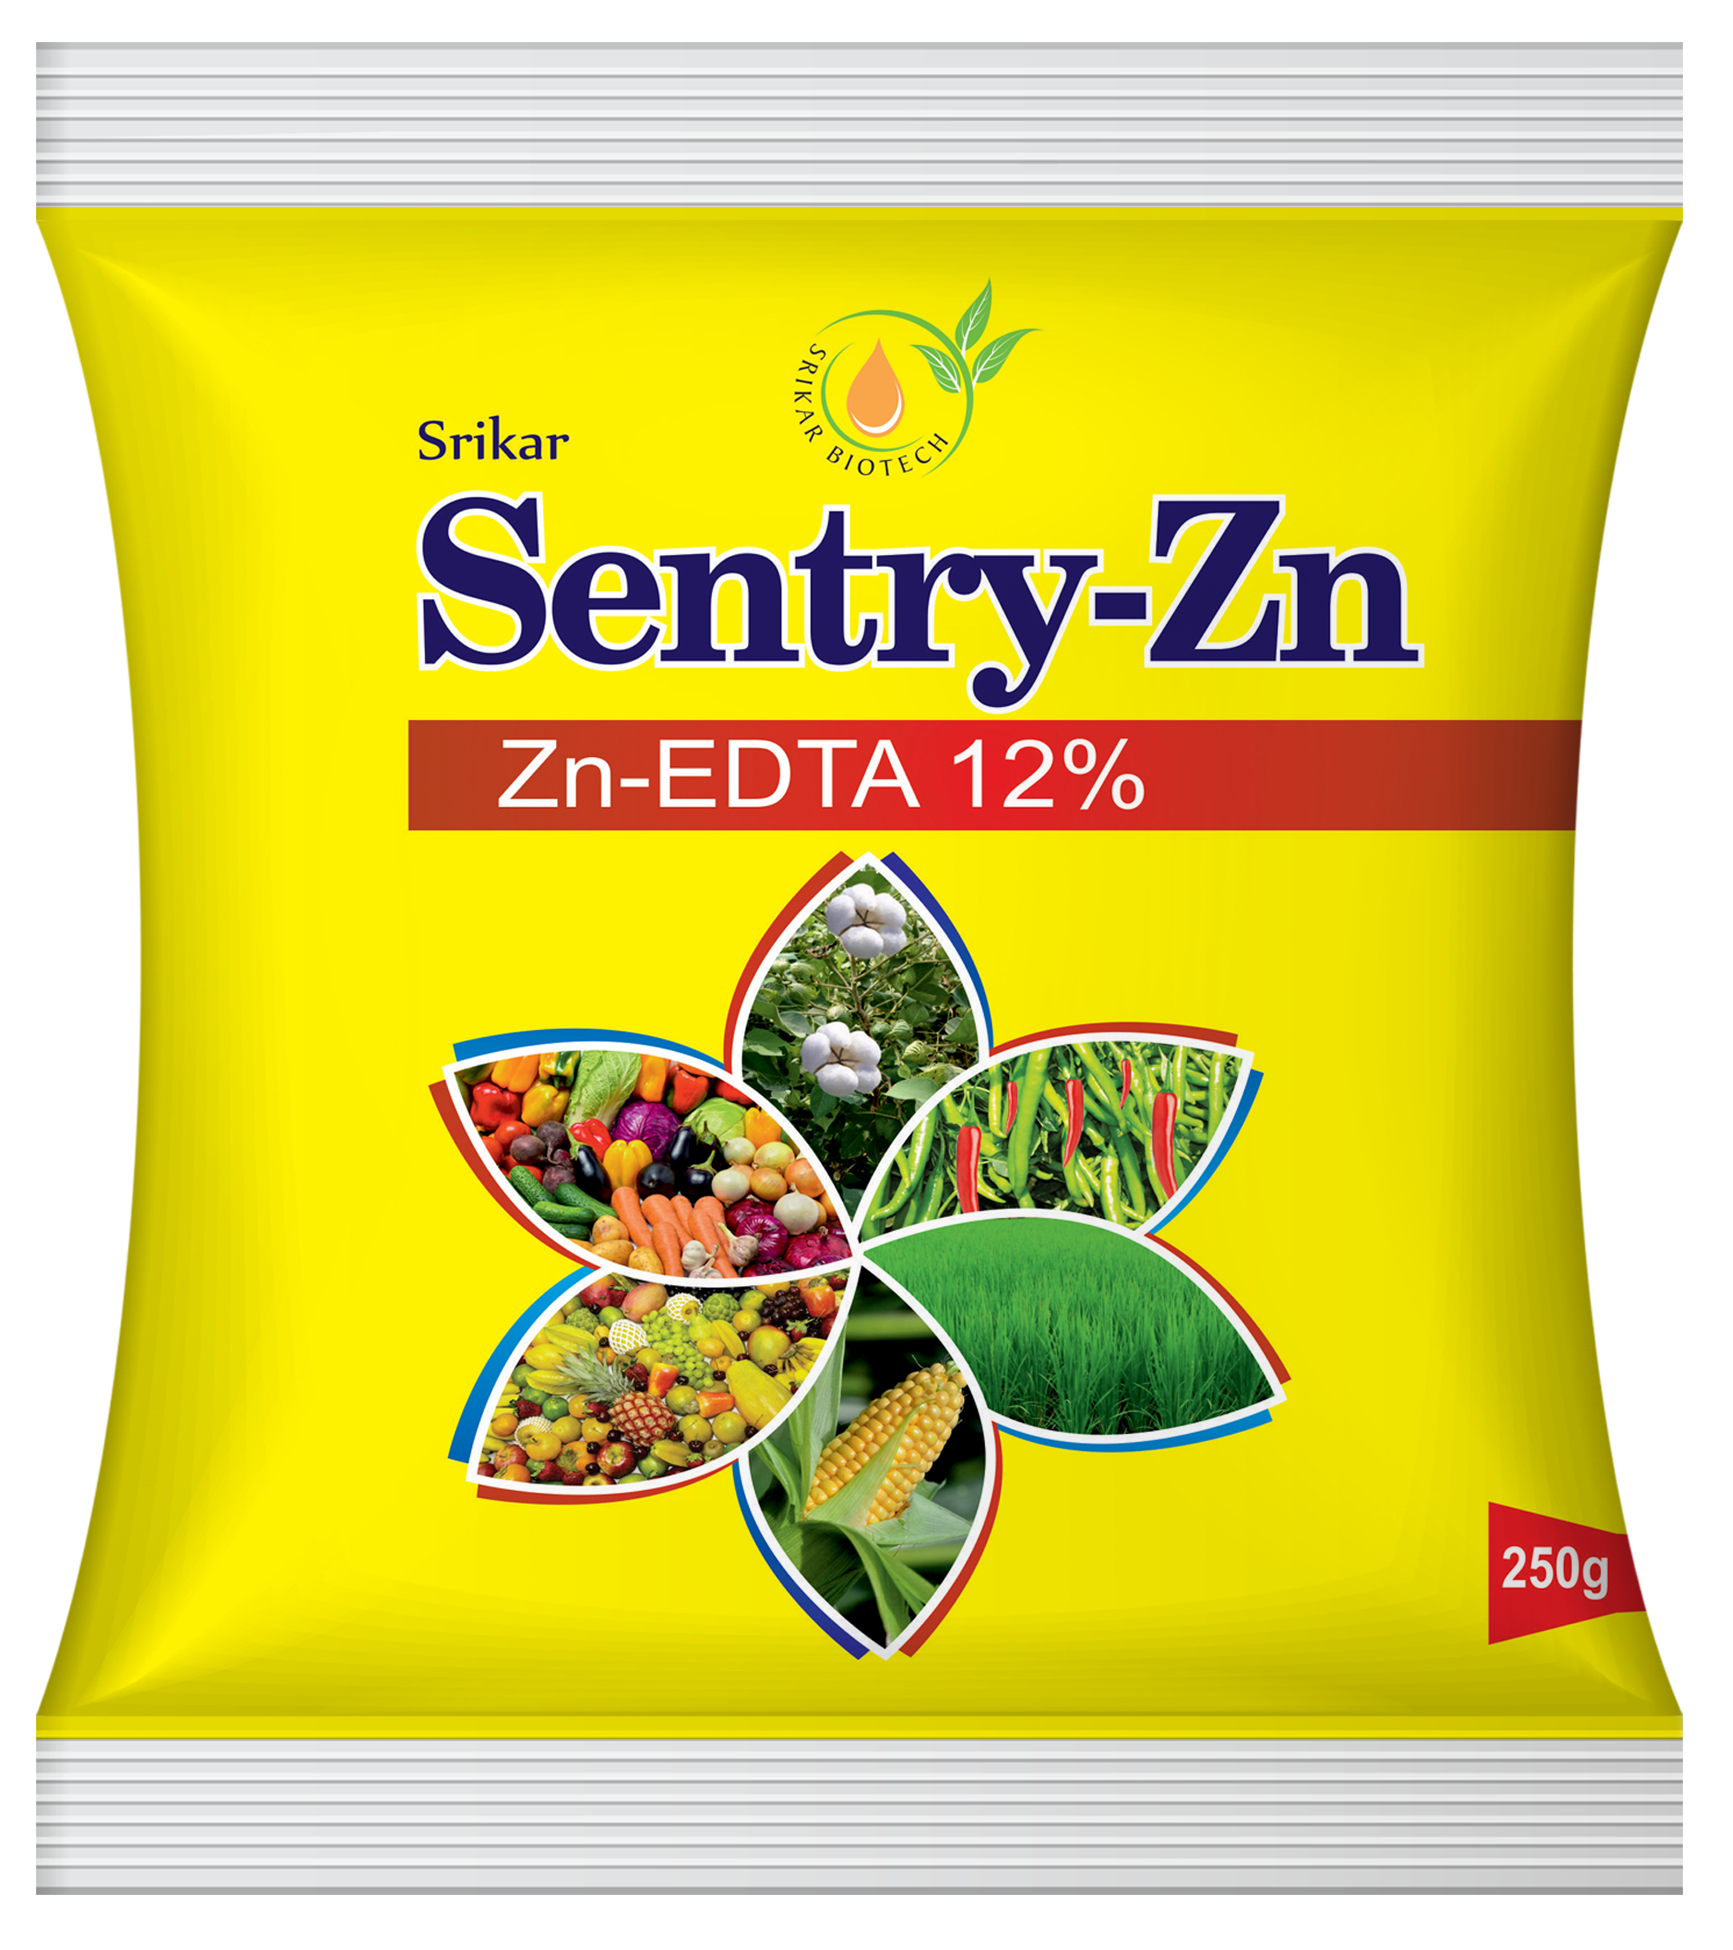 Srikar  Sentry-Zn Image